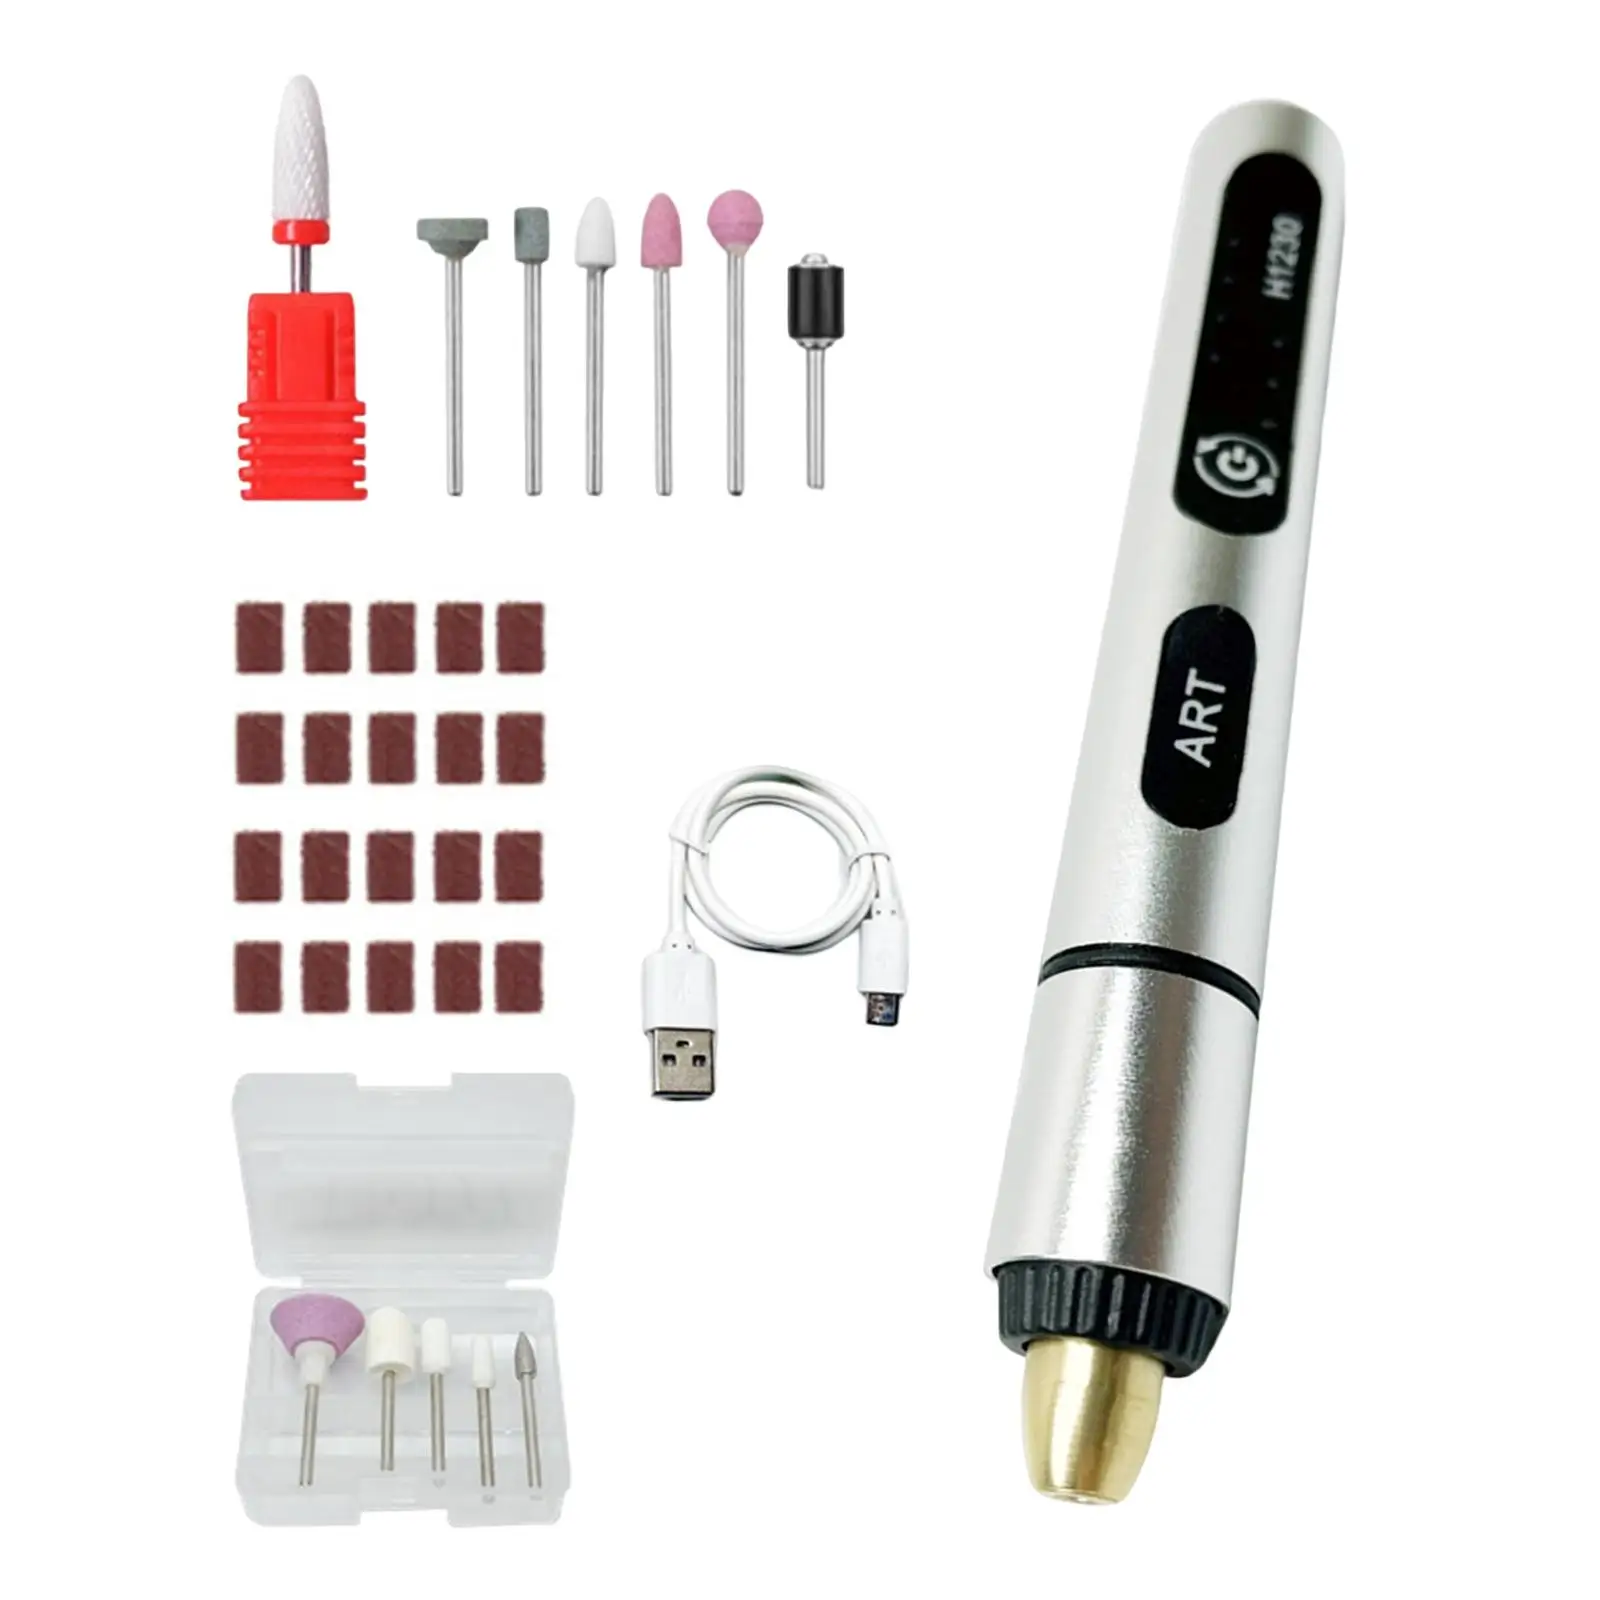 Electrical Nail files Kit Rechargeable Manicure Pedicure Pen Polisher Sander Adjustable Speed for Gel Nails Crafts Metal Sanding